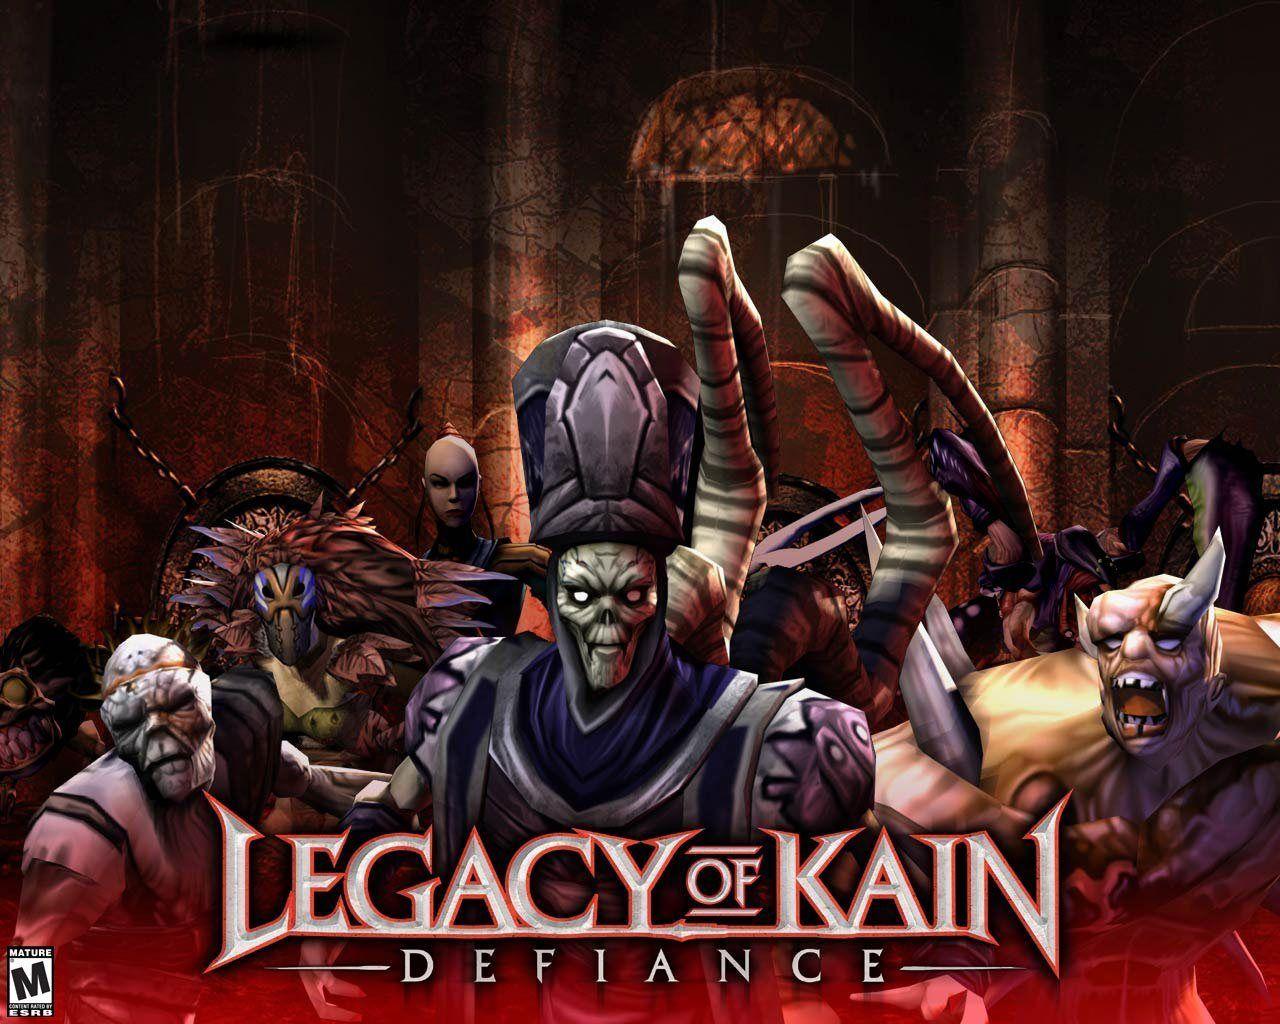 Legacy of Kain image Legacy of Kain wallpaper HD wallpaper